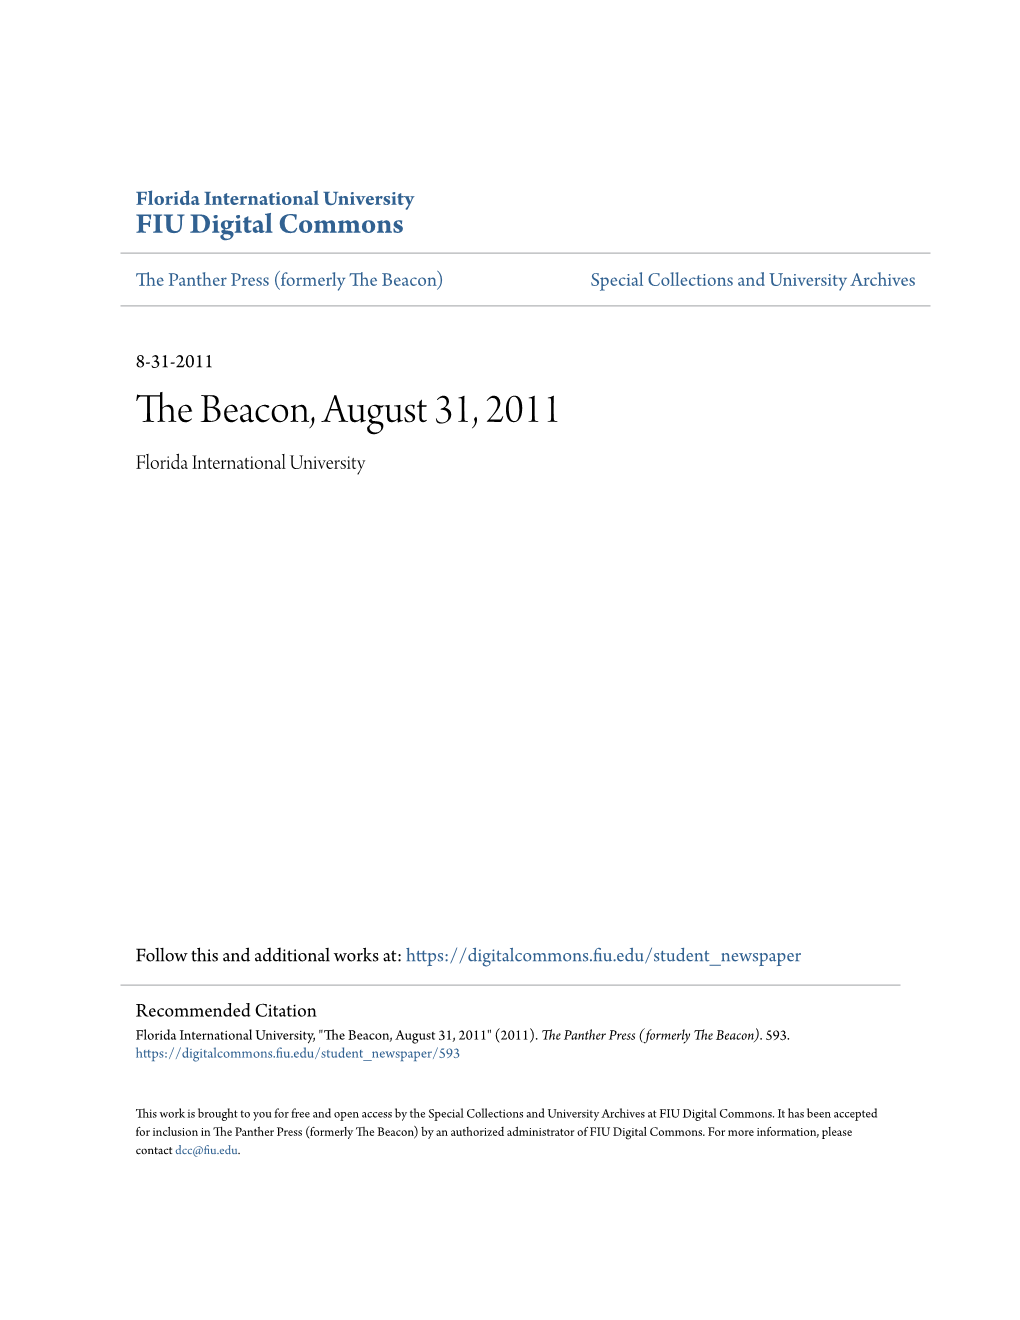 The Beacon, August 31, 2011 Florida International University